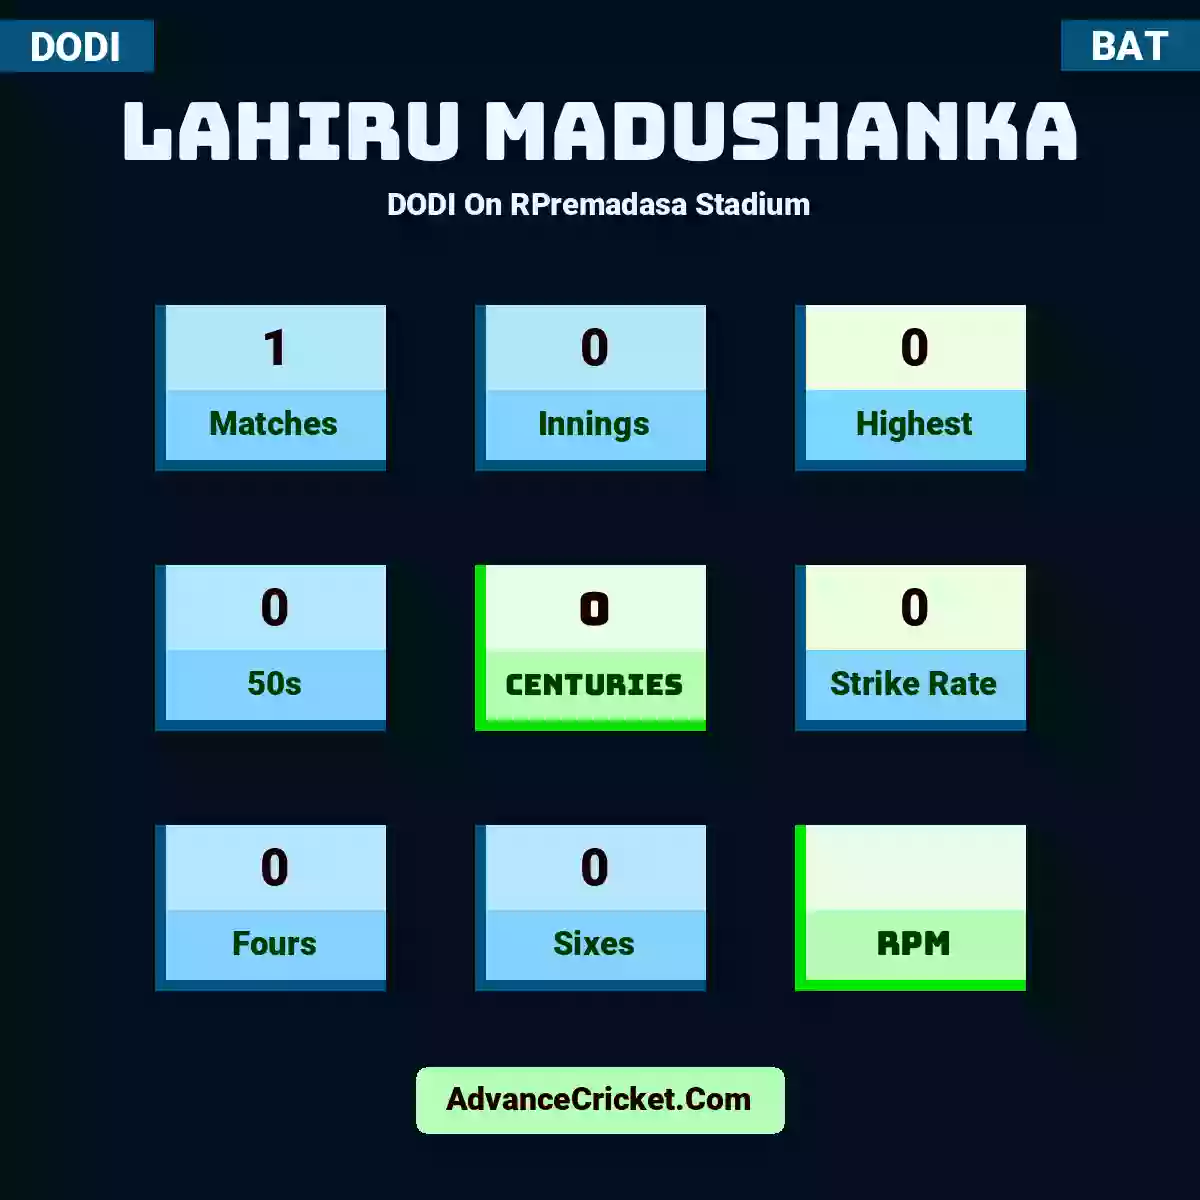 Lahiru Madushanka DODI  On RPremadasa Stadium, Lahiru Madushanka played 1 matches, scored 0 runs as highest, 0 half-centuries, and 0 centuries, with a strike rate of 0. L.Madushanka hit 0 fours and 0 sixes.